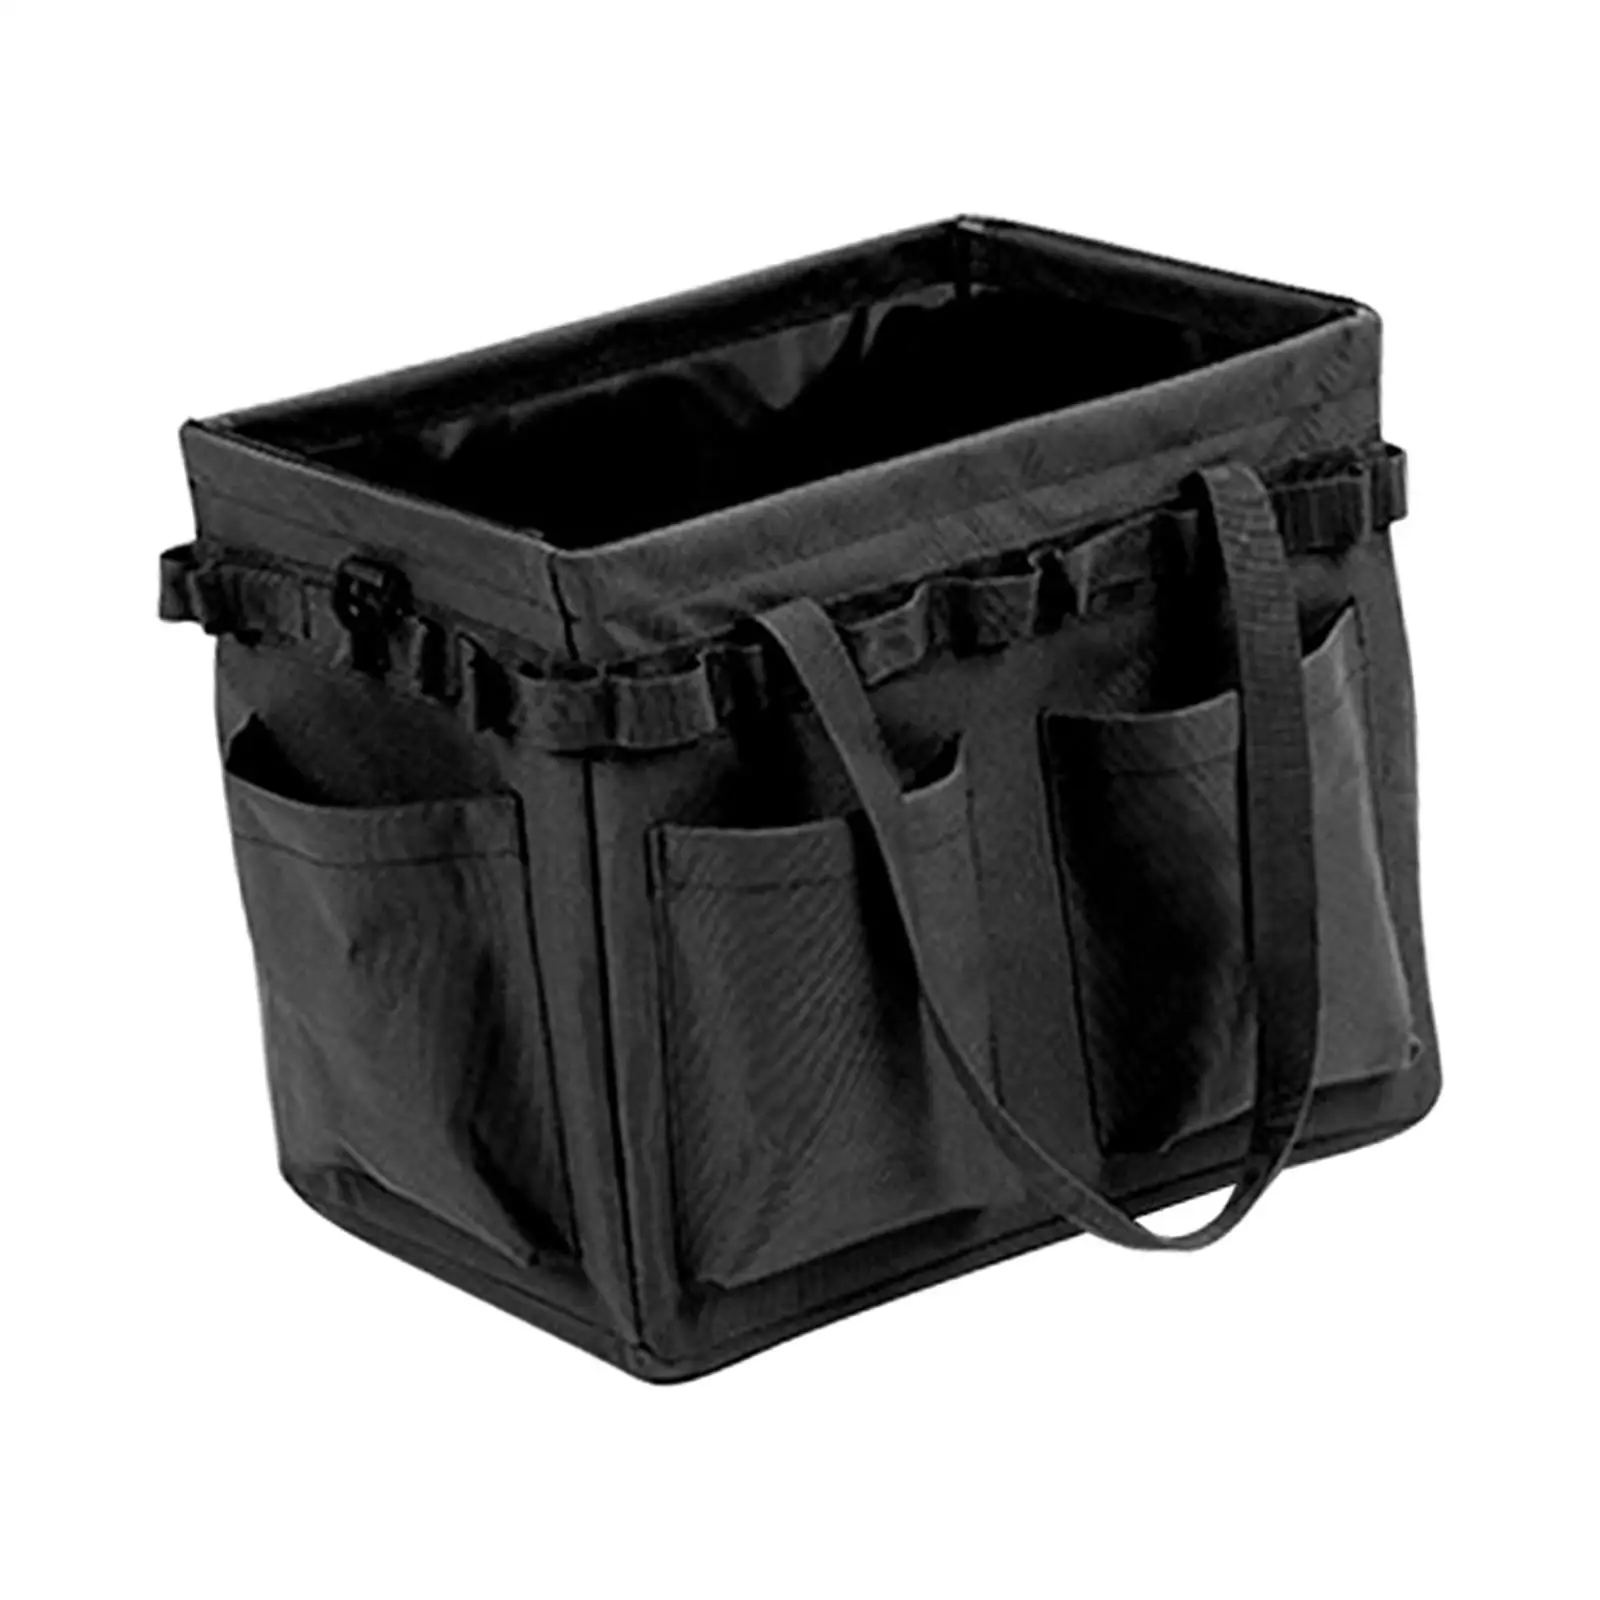 Folding Travel Duffel Tote Handbag Utility Tote Bag Organizer Container Case